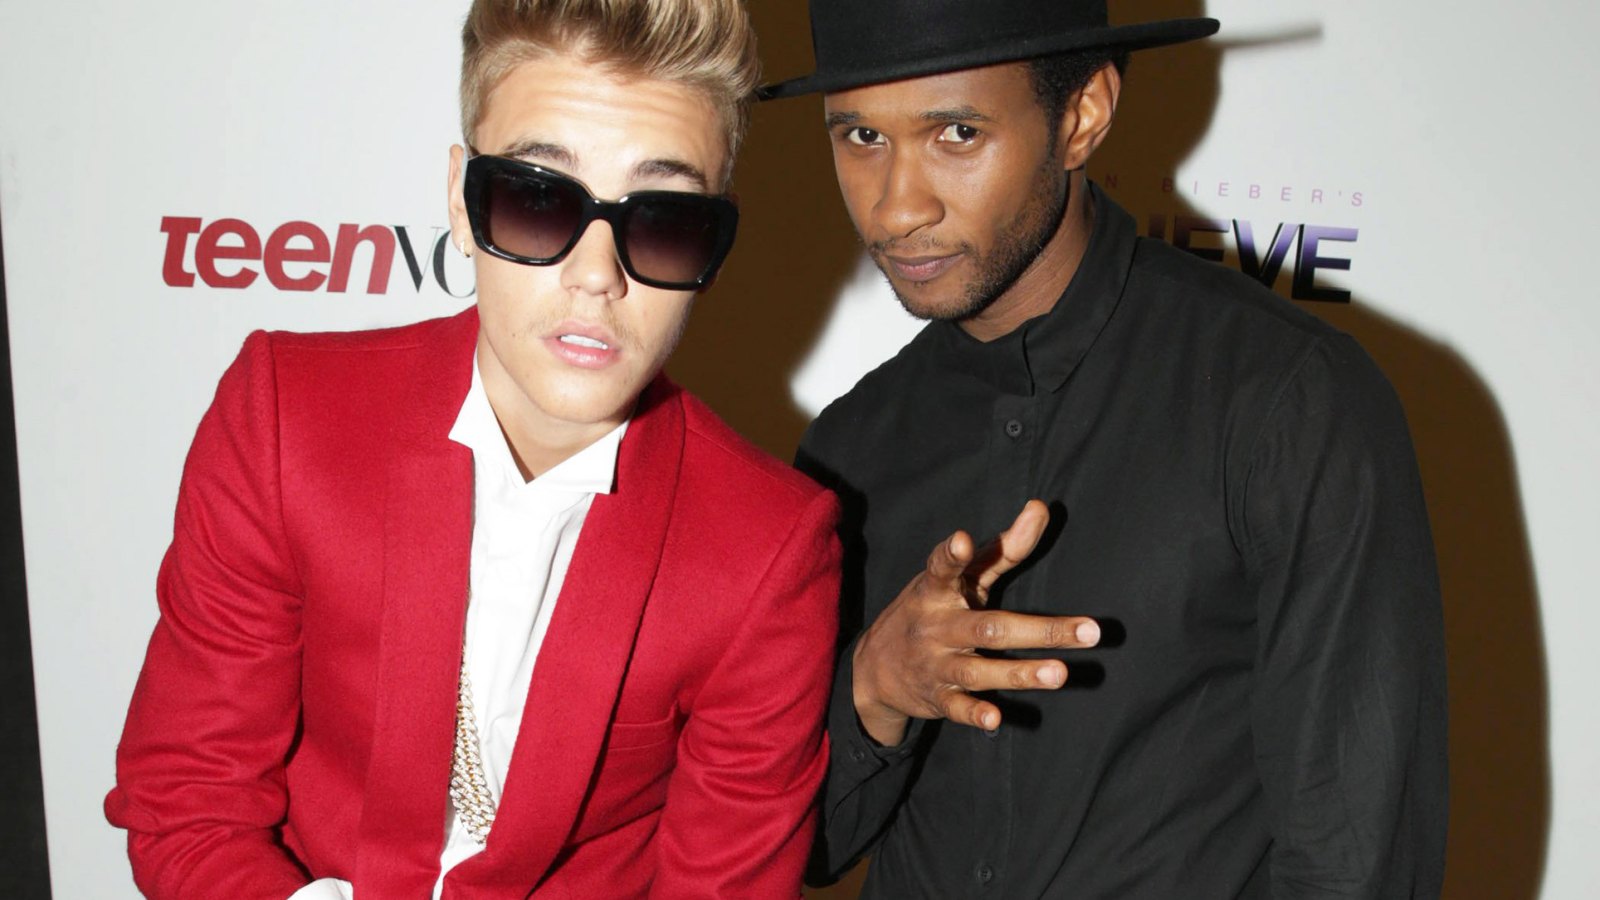 Justin Bieber and Usher Raymond